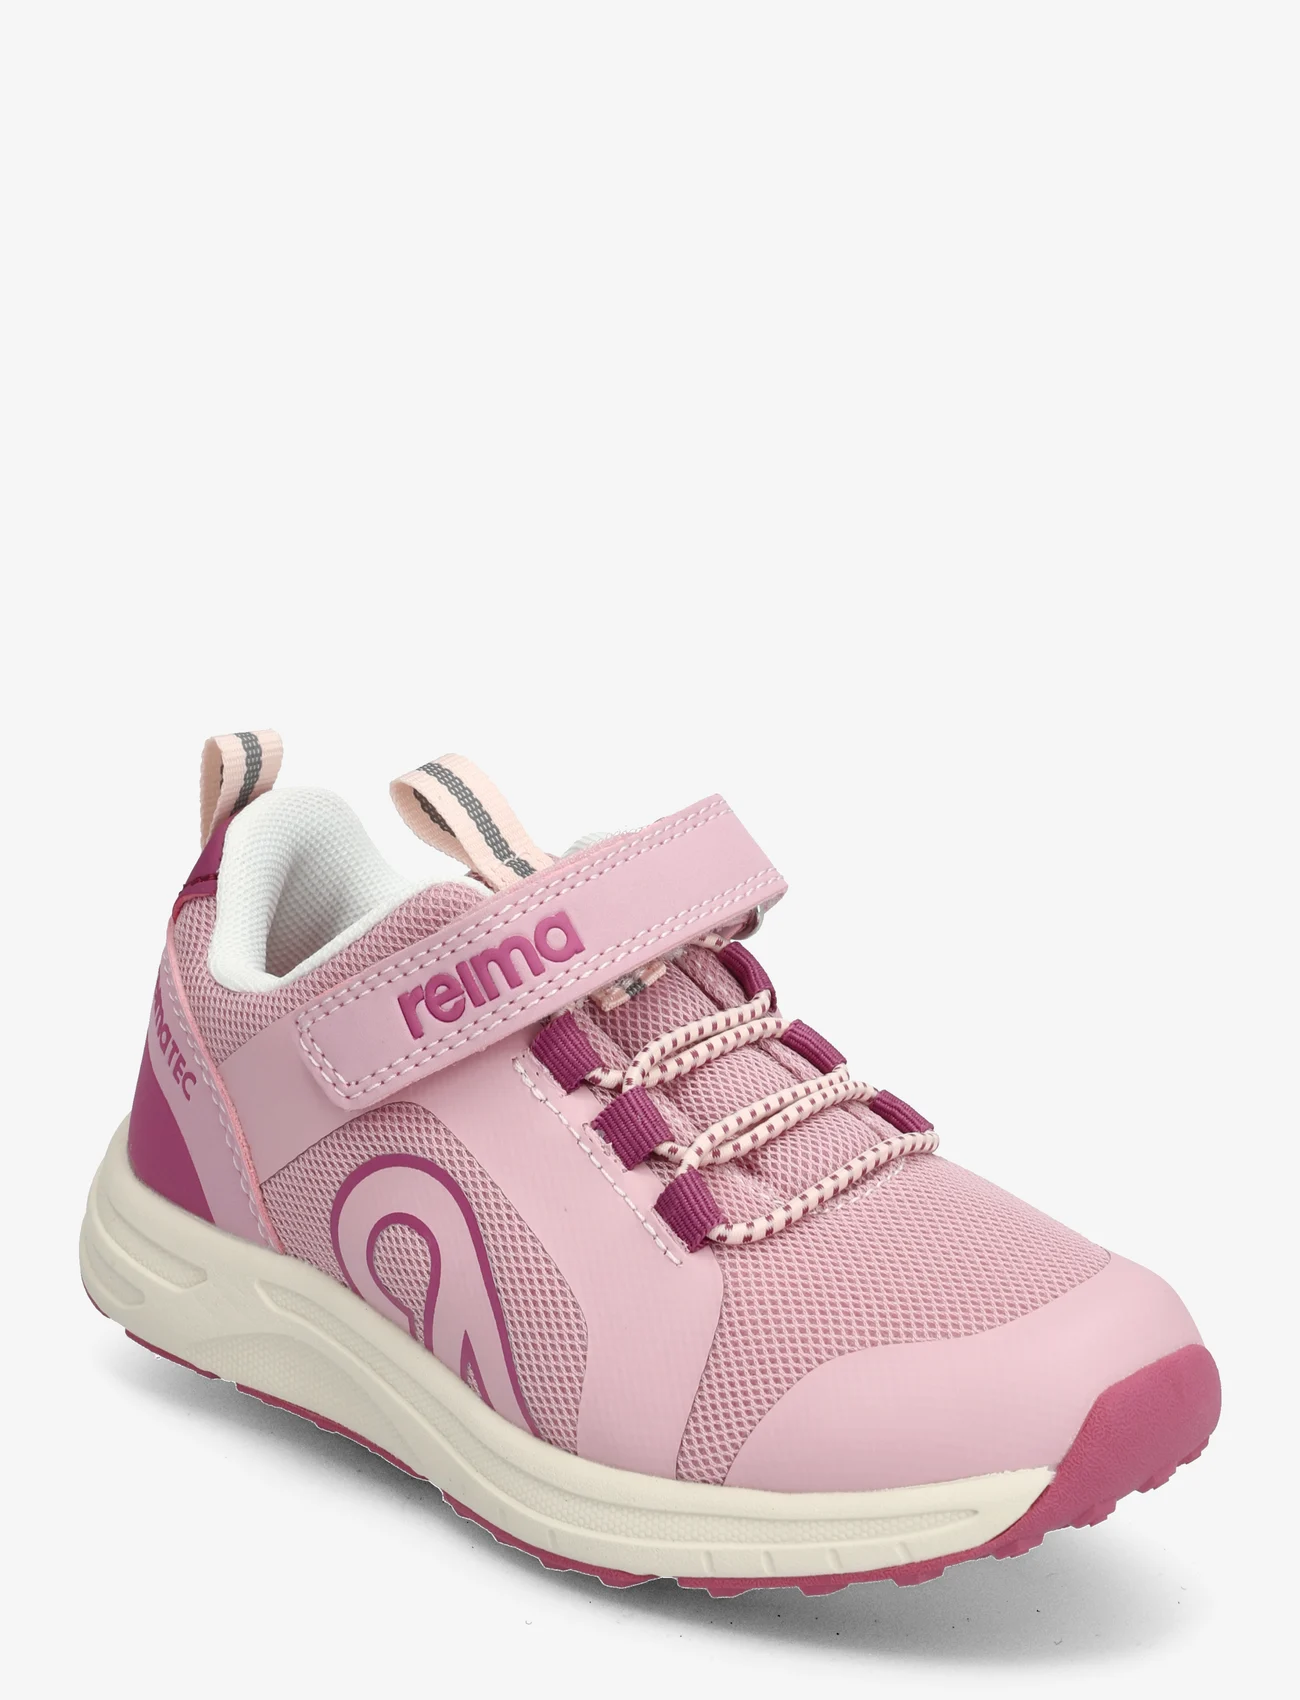 Reima - Reimatec shoes, Enkka - dzieci - grey pink - 0